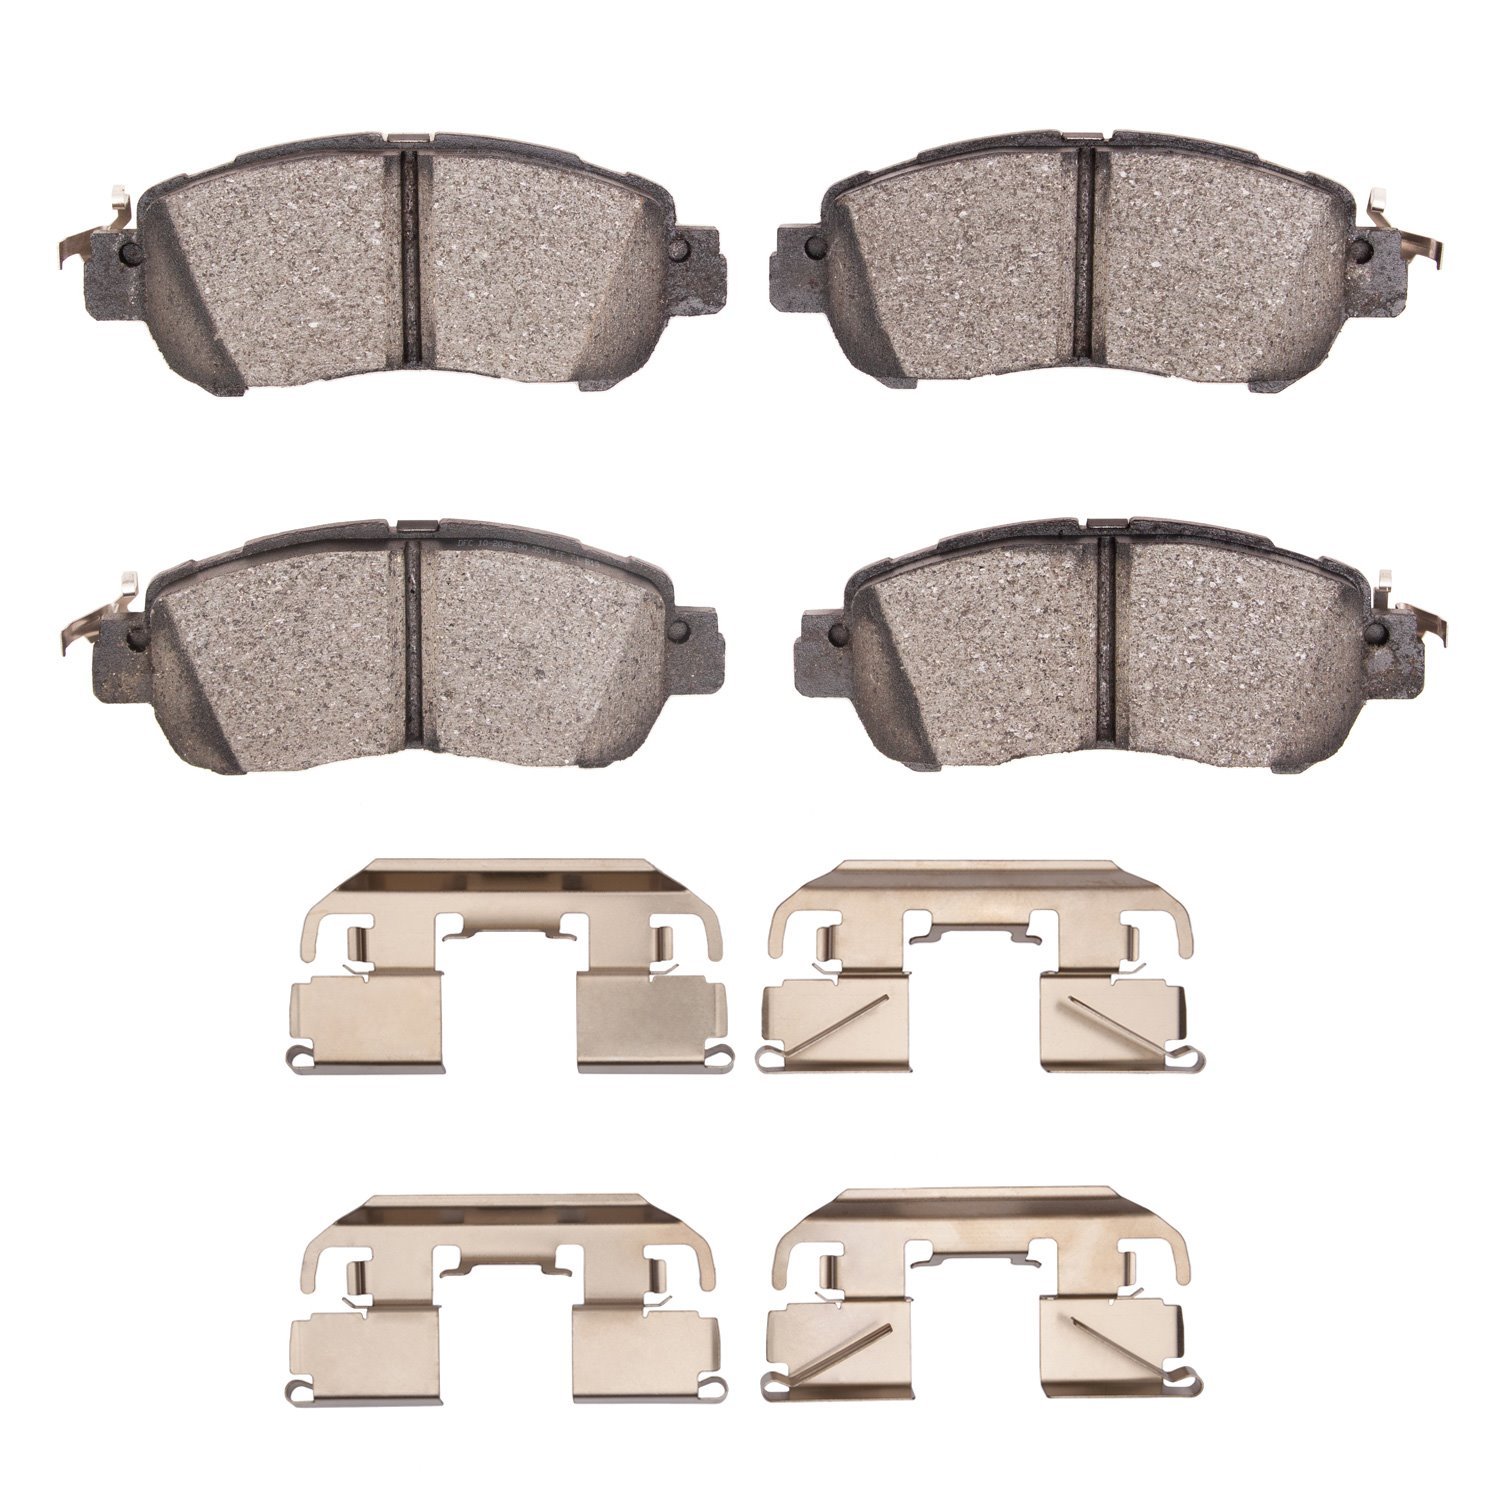 1551-2038-01 5000 Advanced Ceramic Brake Pads & Hardware Kit, Fits Select Infiniti/Nissan, Position: Front